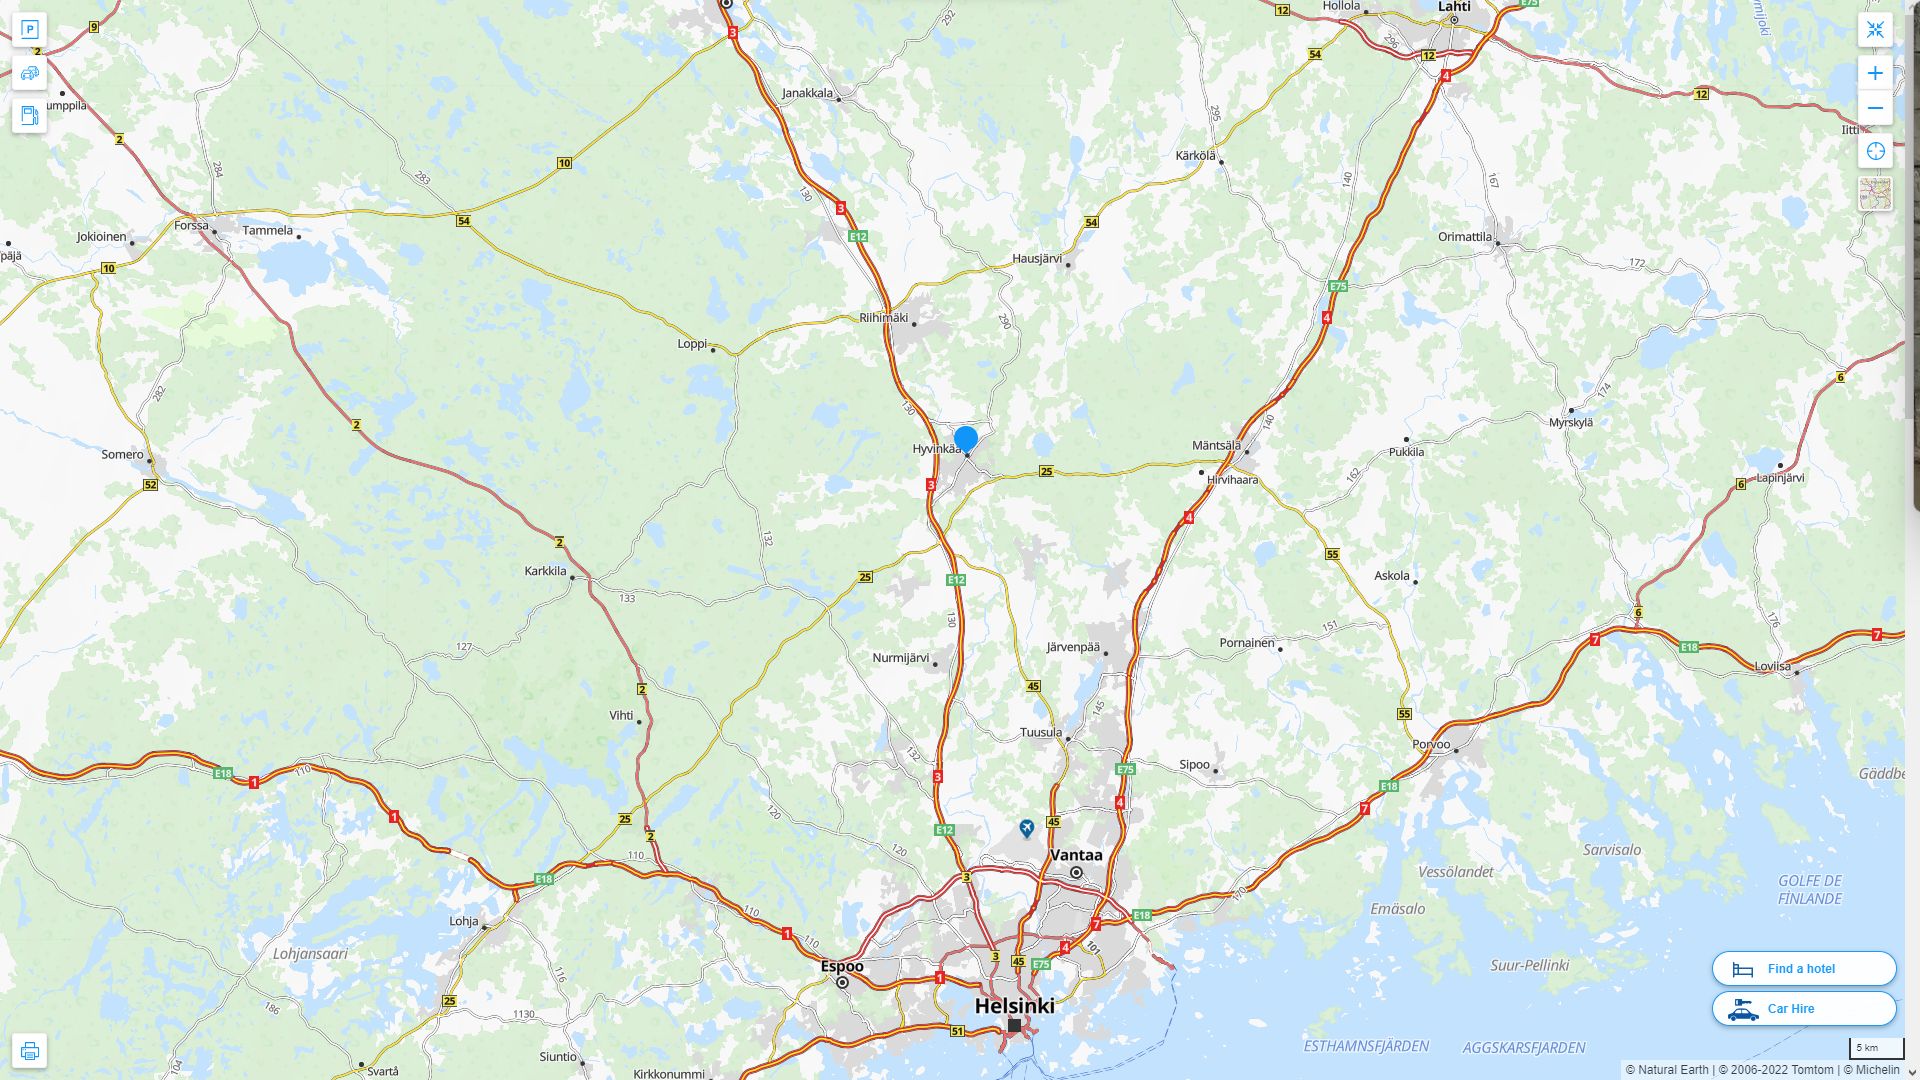 Hyvinkaa Finlande Autoroute et carte routiere